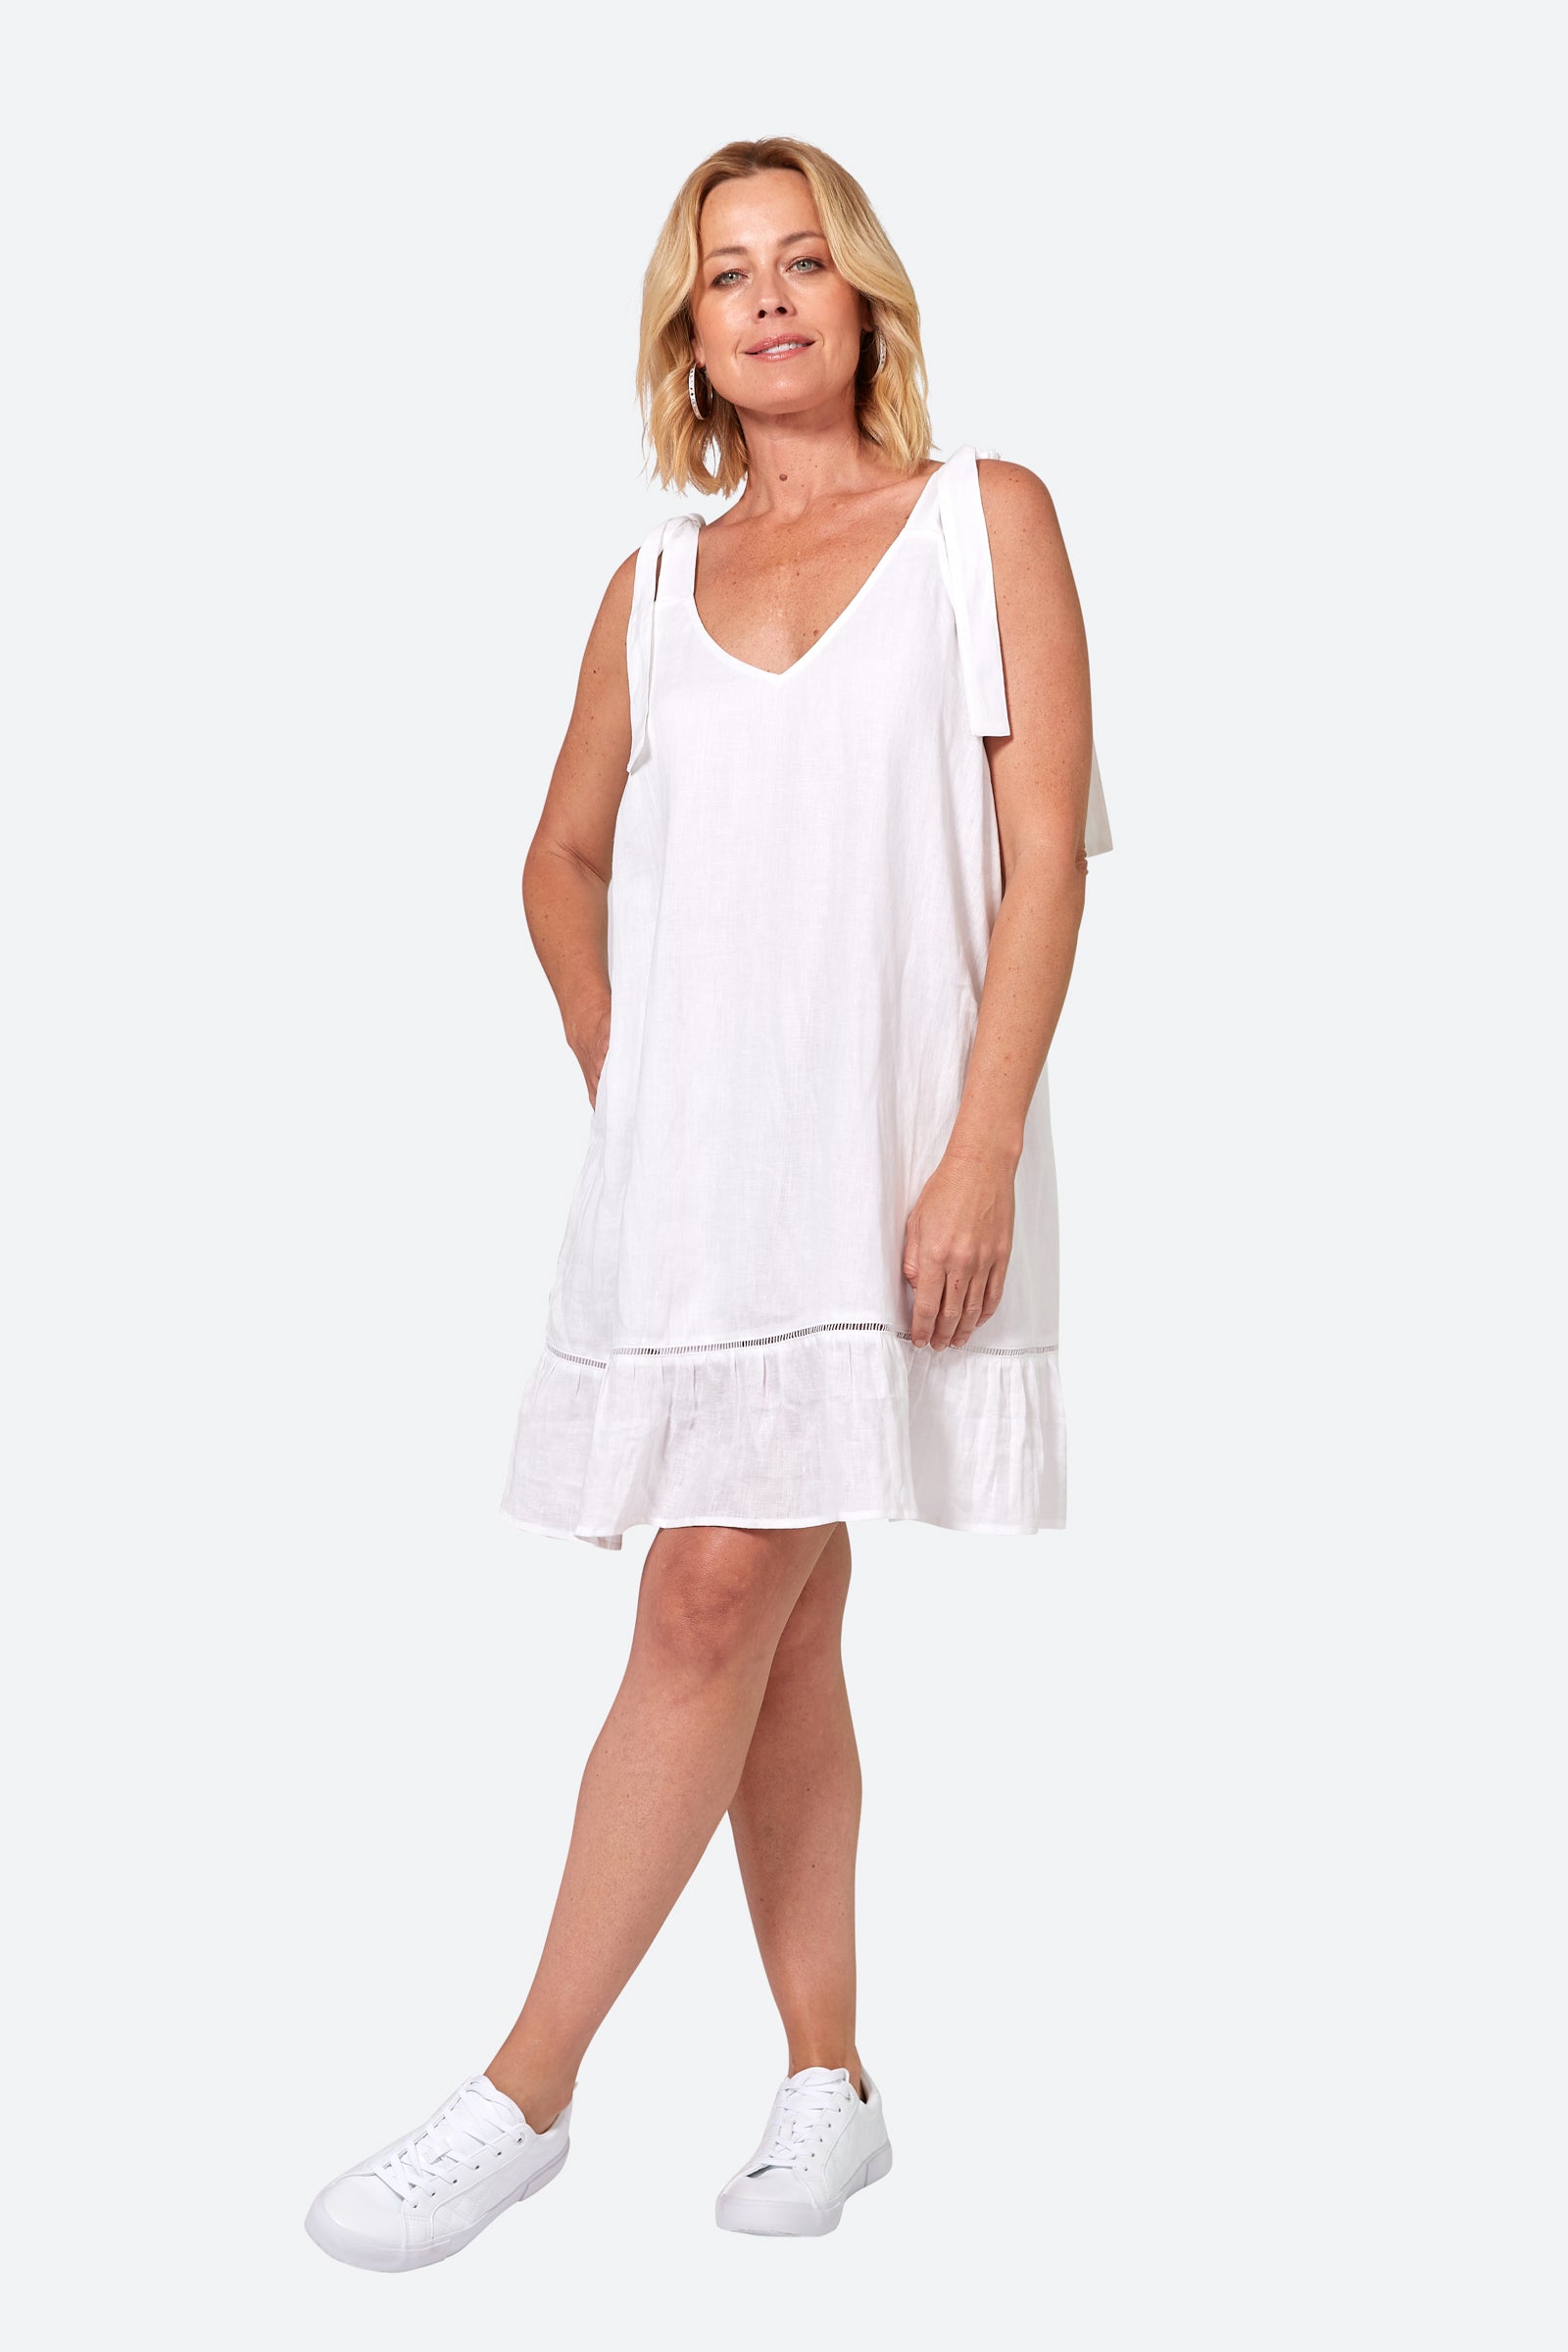 La Vie Tie Dress - Blanc - eb&ive Clothing - Dress Strappy Mid Linen